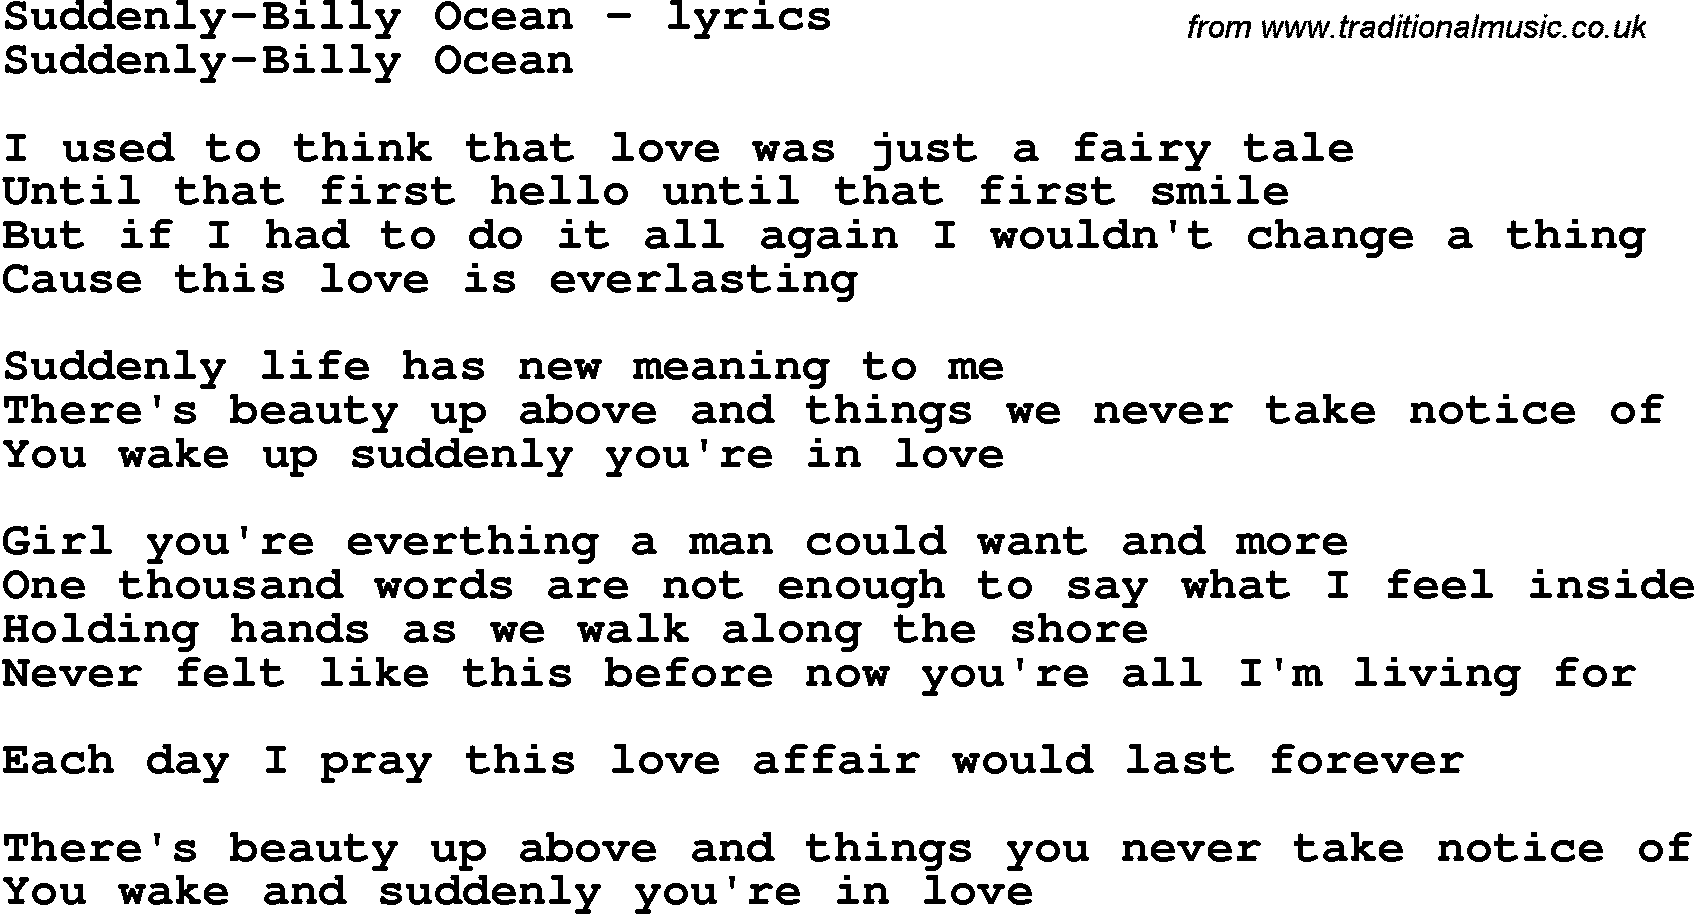 Love Song Lyrics for: Suddenly-Billy Ocean